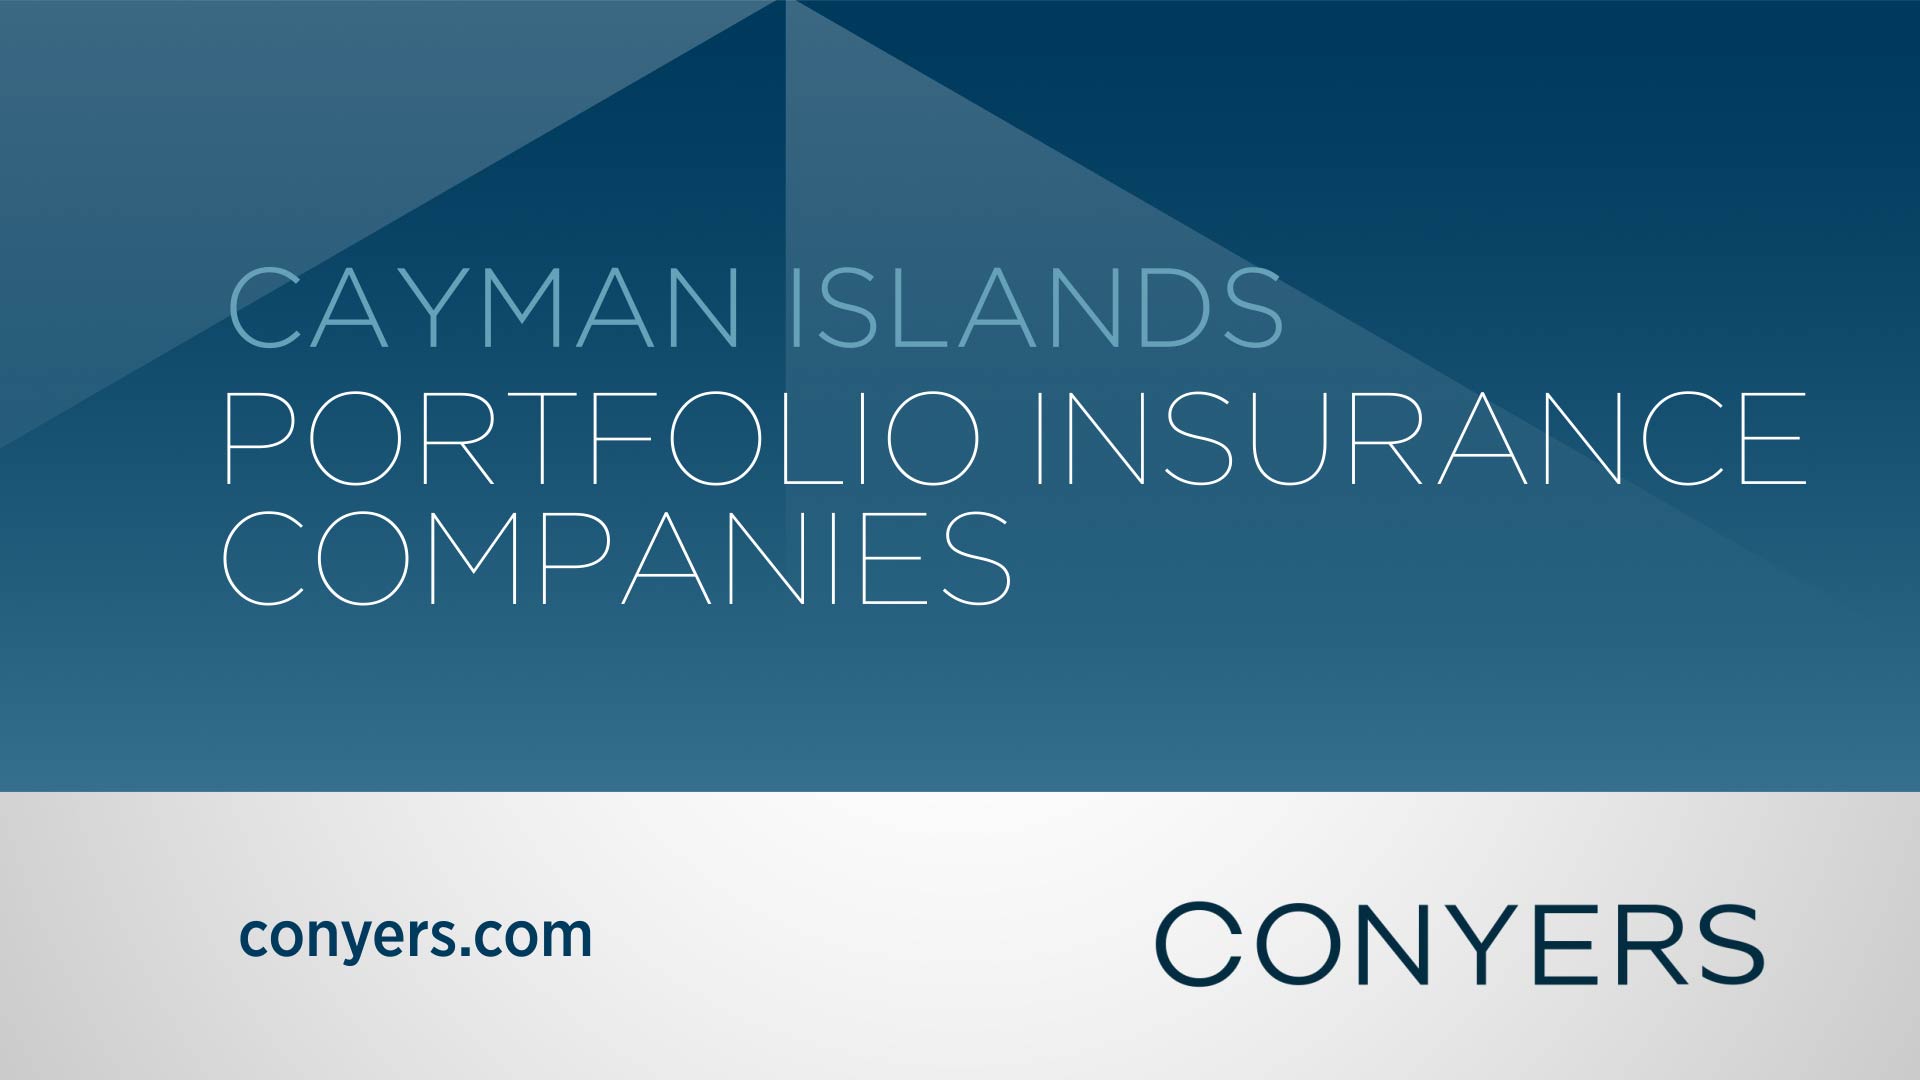 Cayman Islands Portfolio Insurance Companies Video